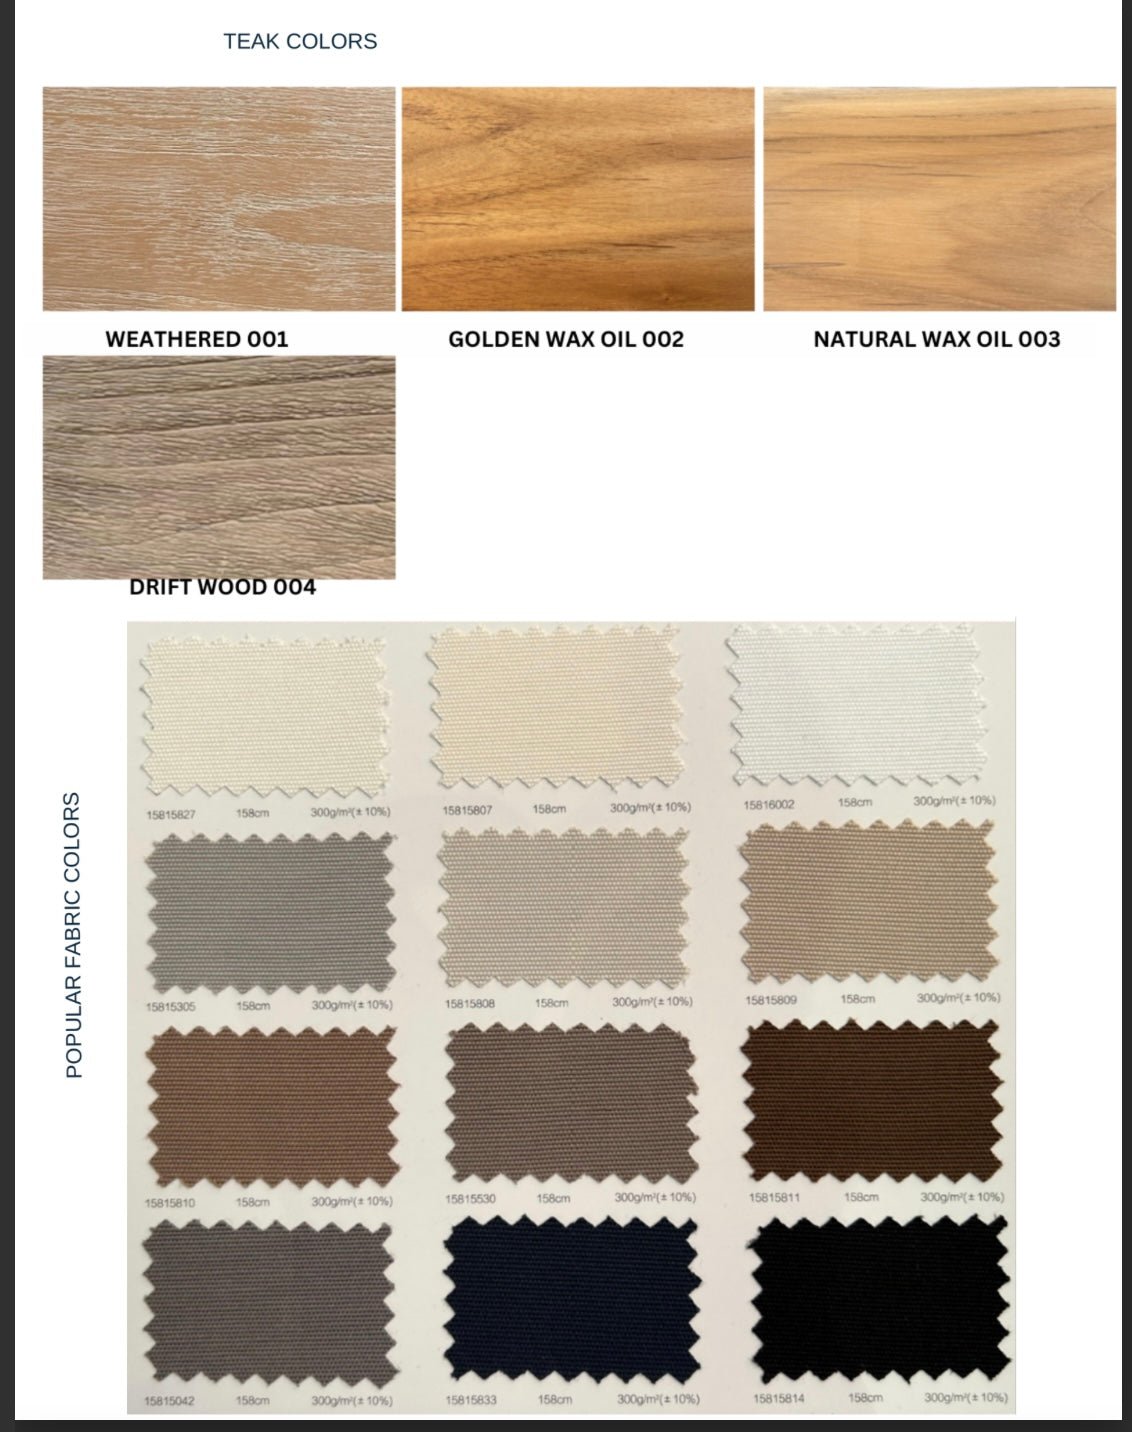 Captiva Collection- Outdoor Premium Teak Wood Sofa Set - Sunzout Outdoor Spaces LLC